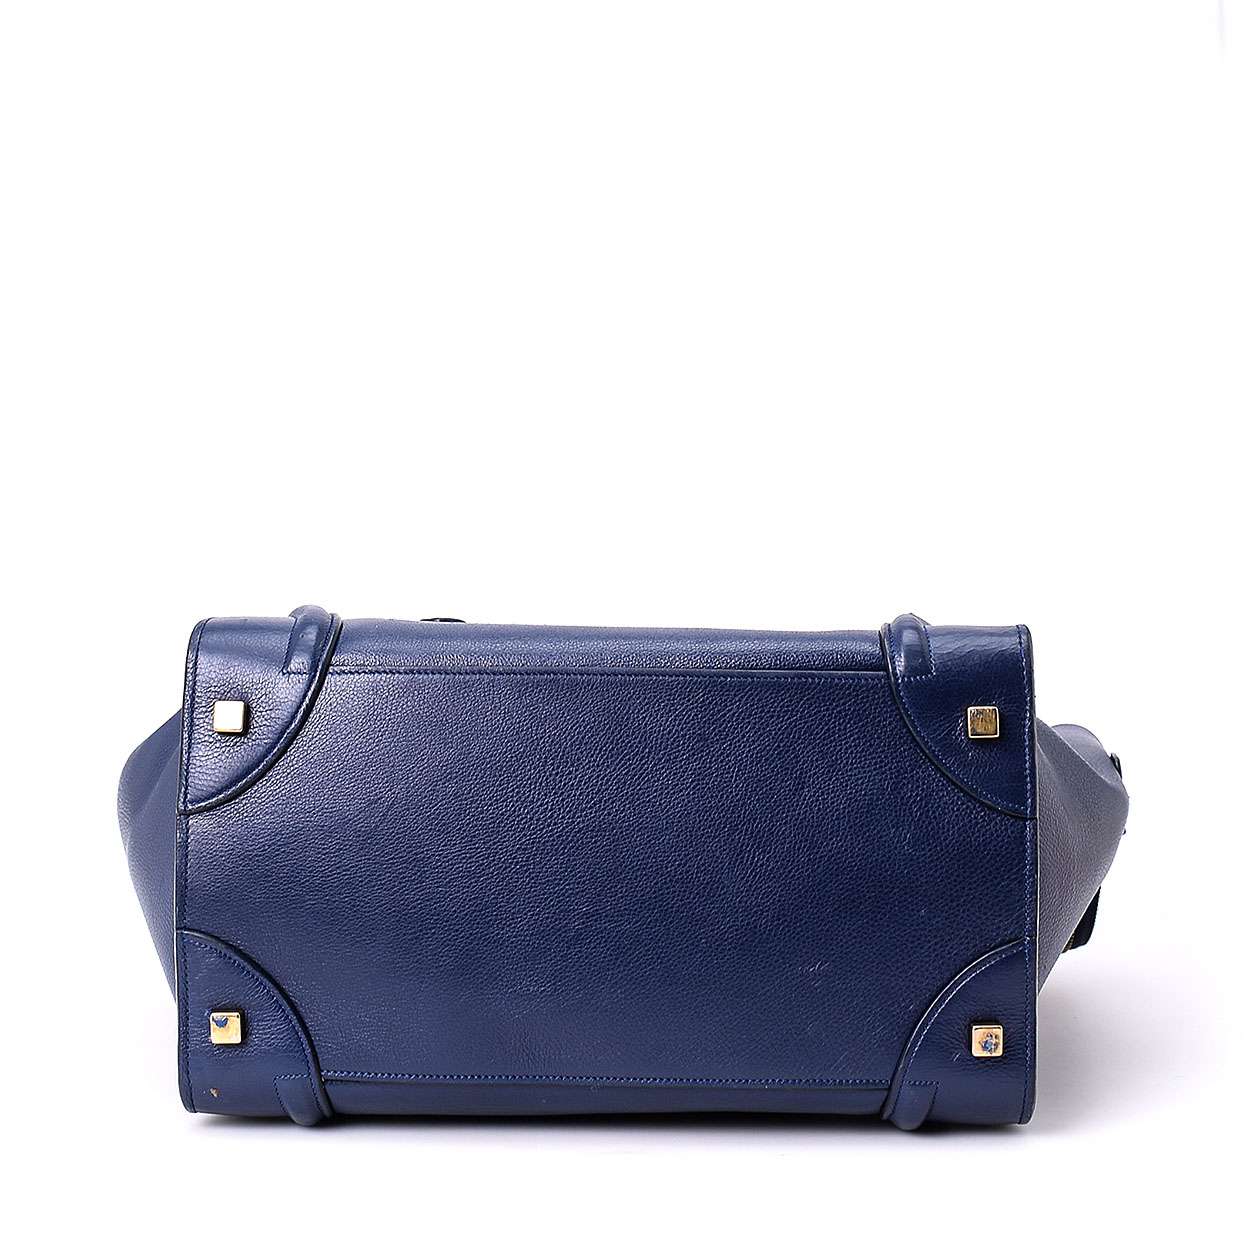 Celine - Navy Blue Leather Medium Luggage Tote Bag